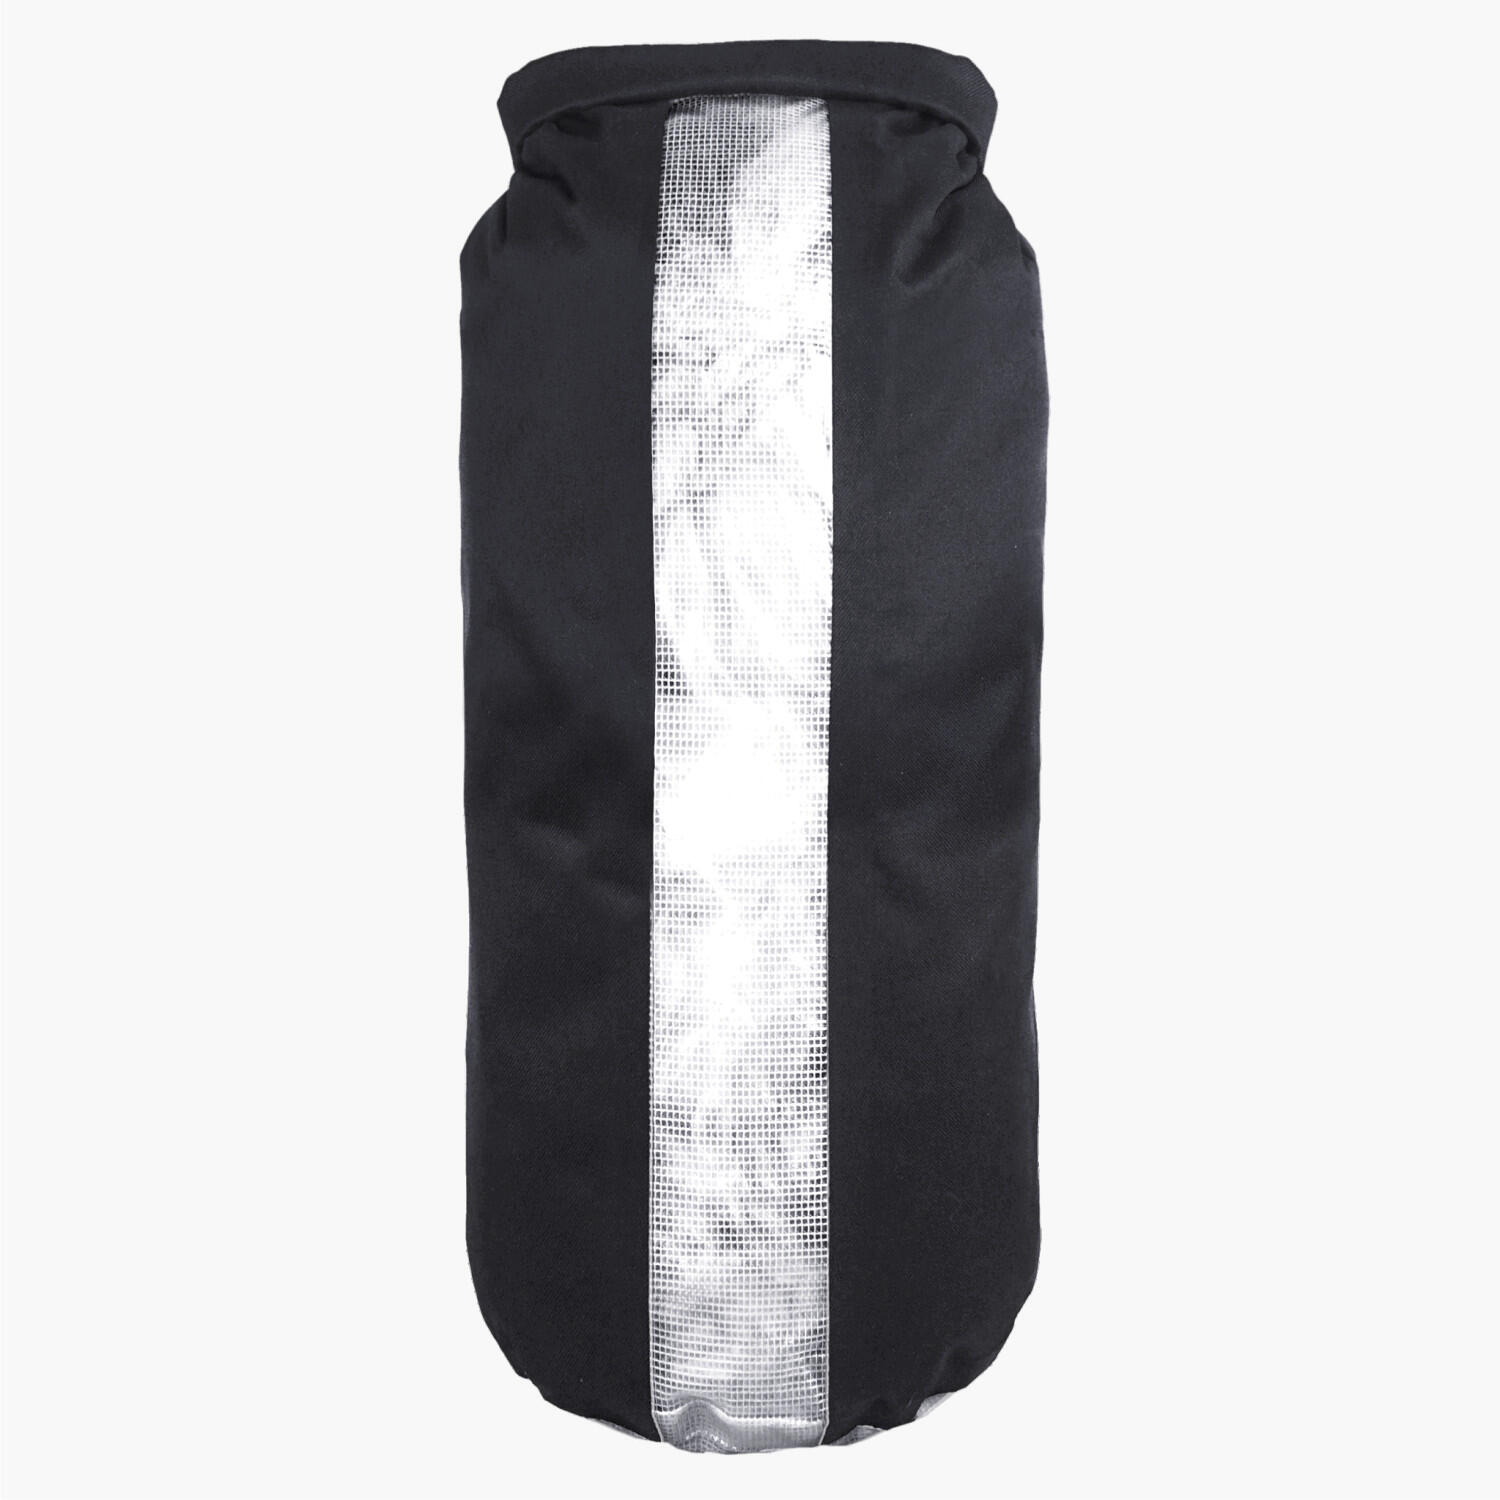 Lomo 40L Dry Bag - Black with Window 5/7